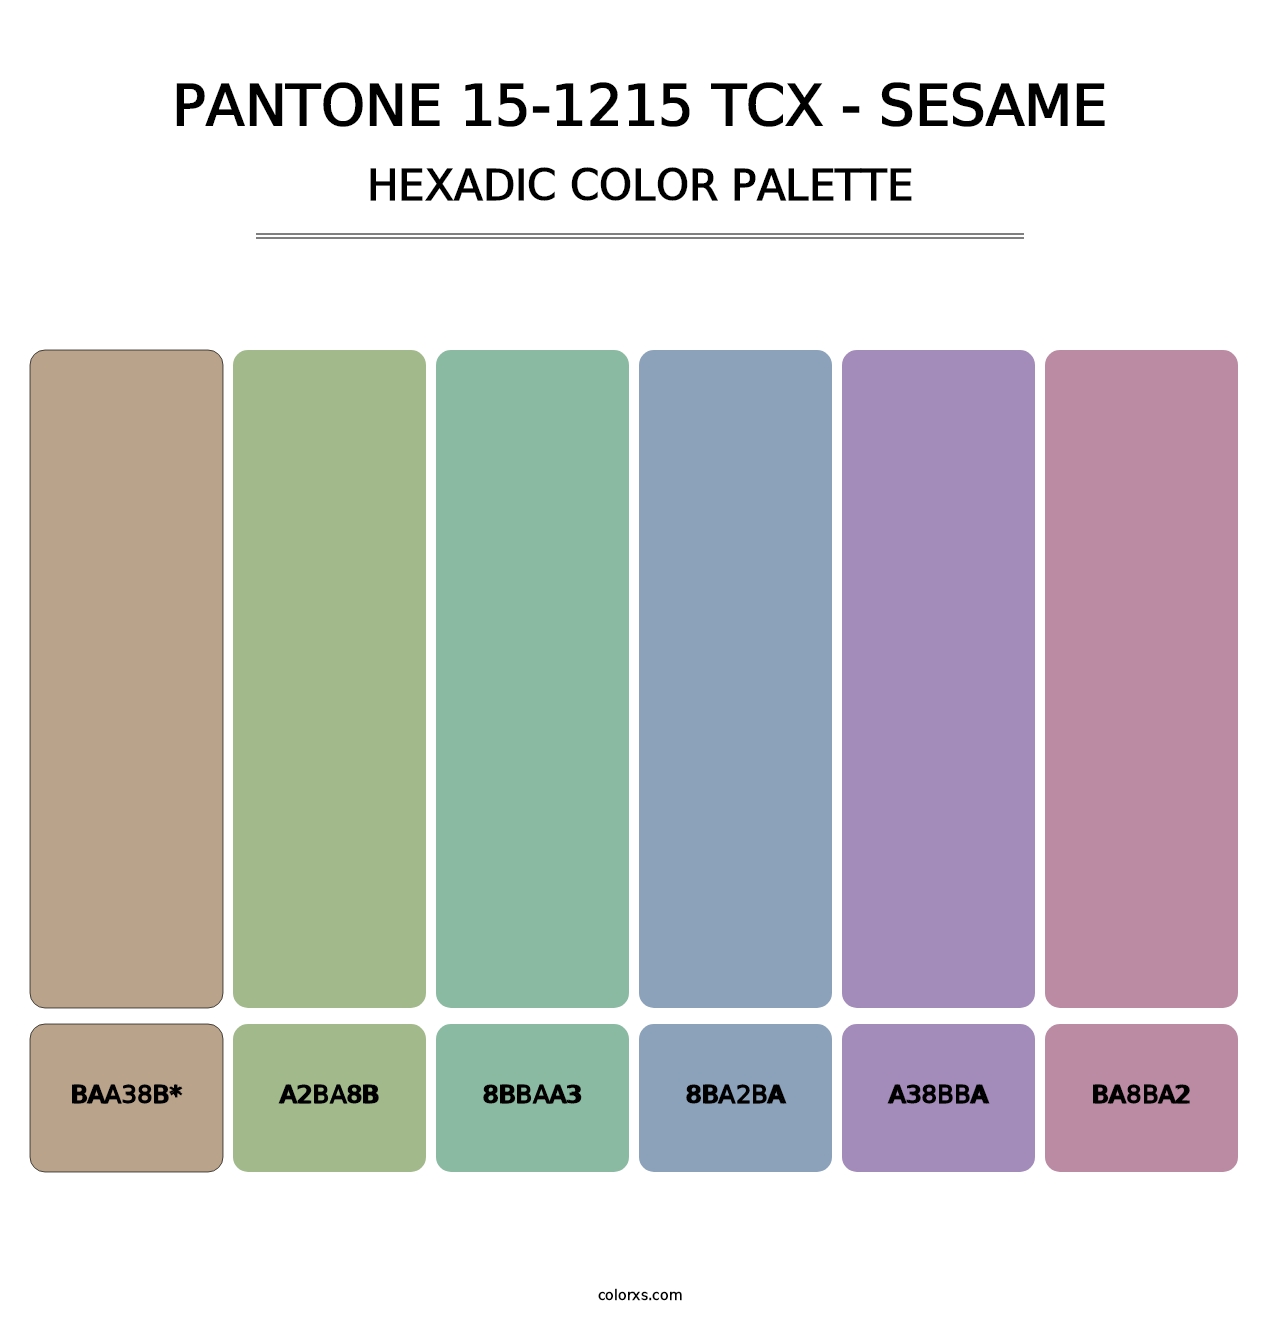 PANTONE 15-1215 TCX - Sesame - Hexadic Color Palette